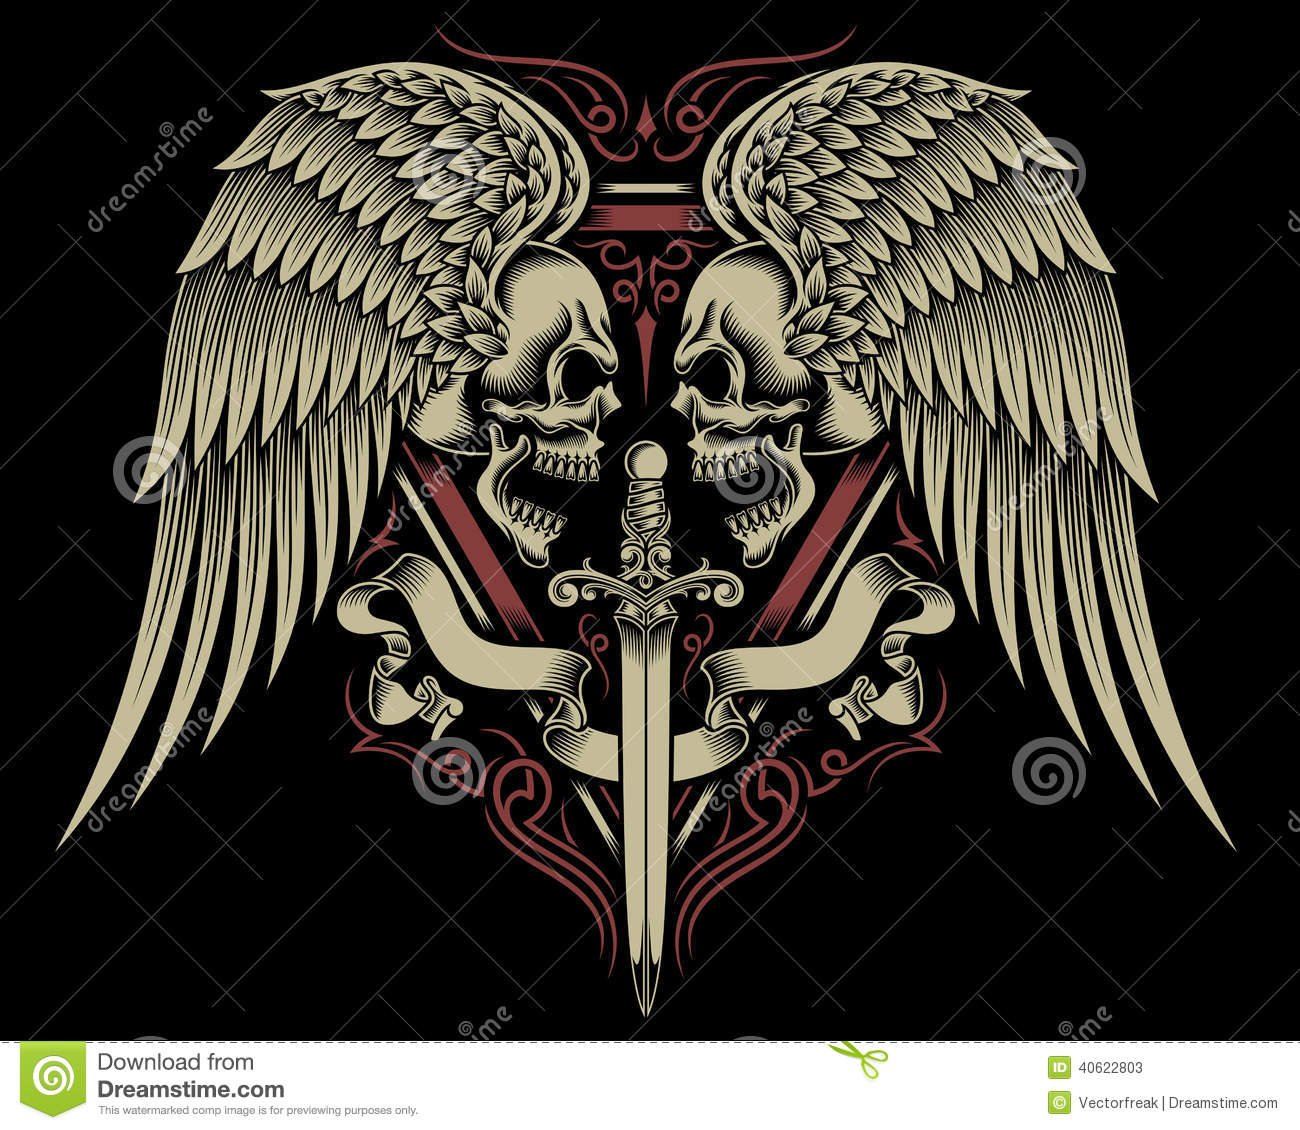 i love you suman name wallpaper,wing,angel,illustration,skull,symbol